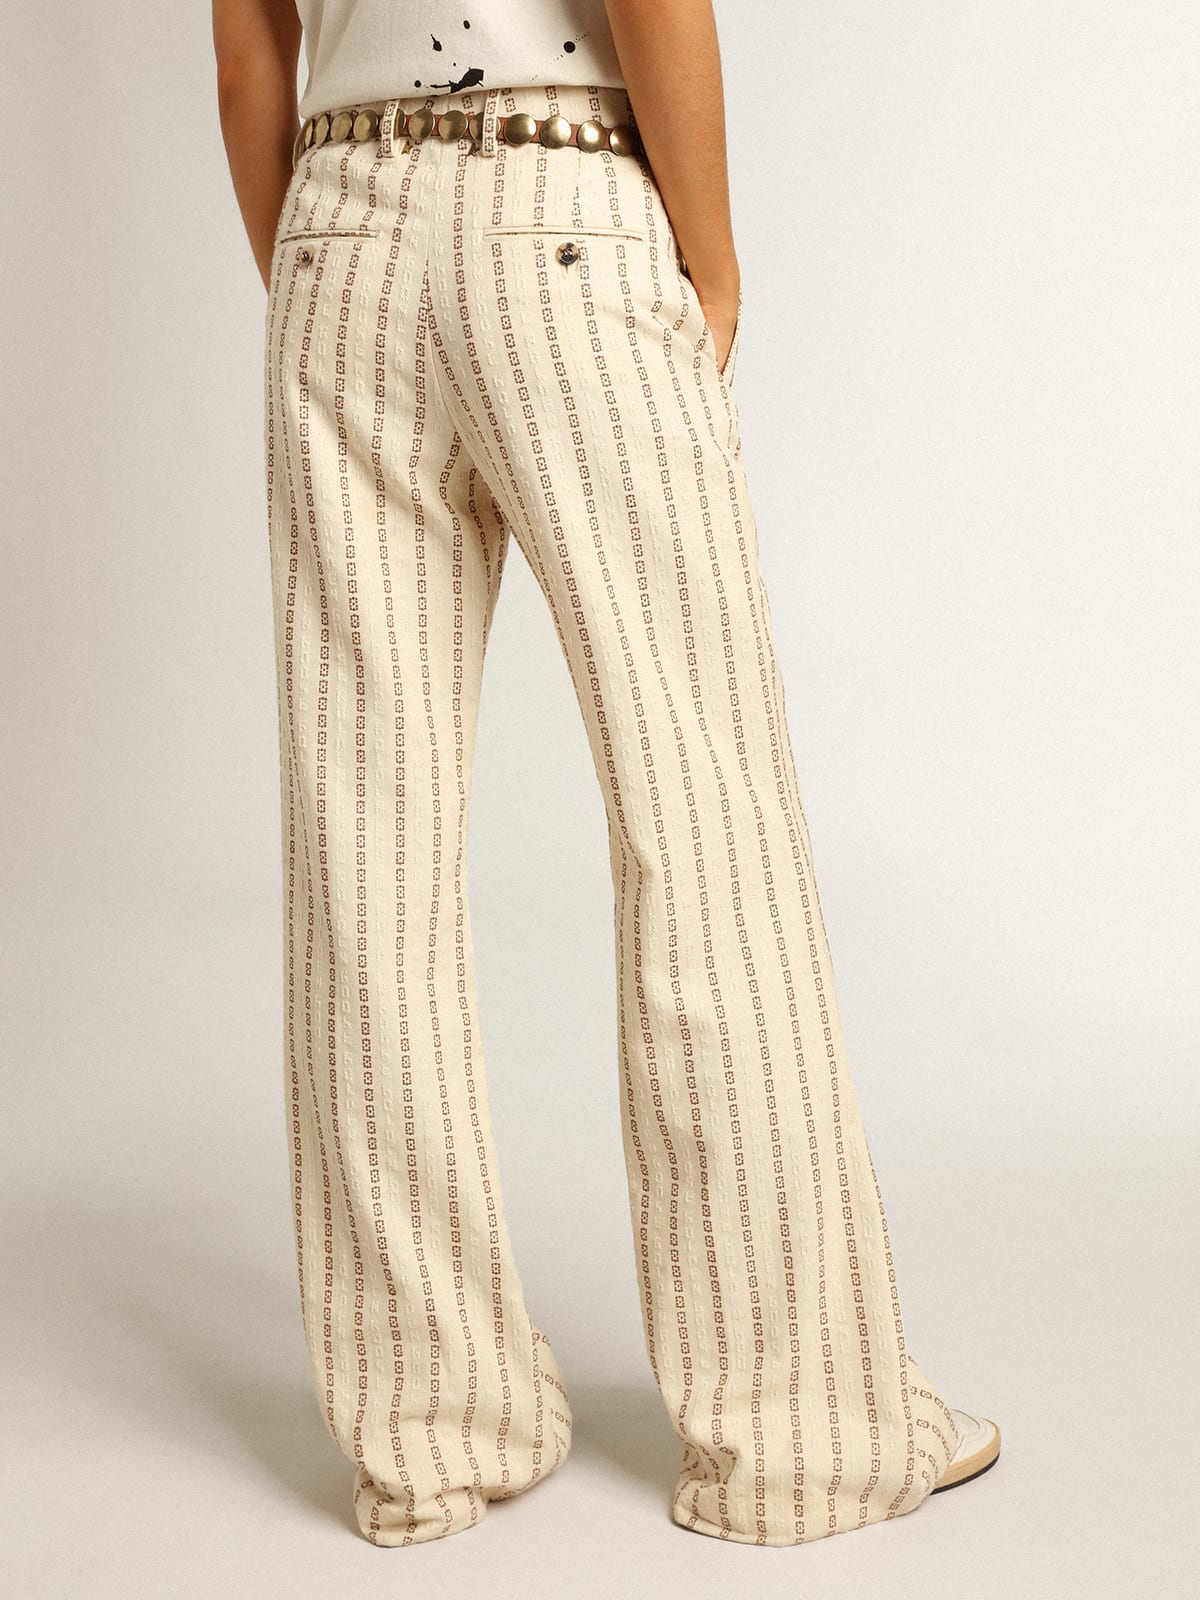 Cream-colored cotton pants with jacquard motif